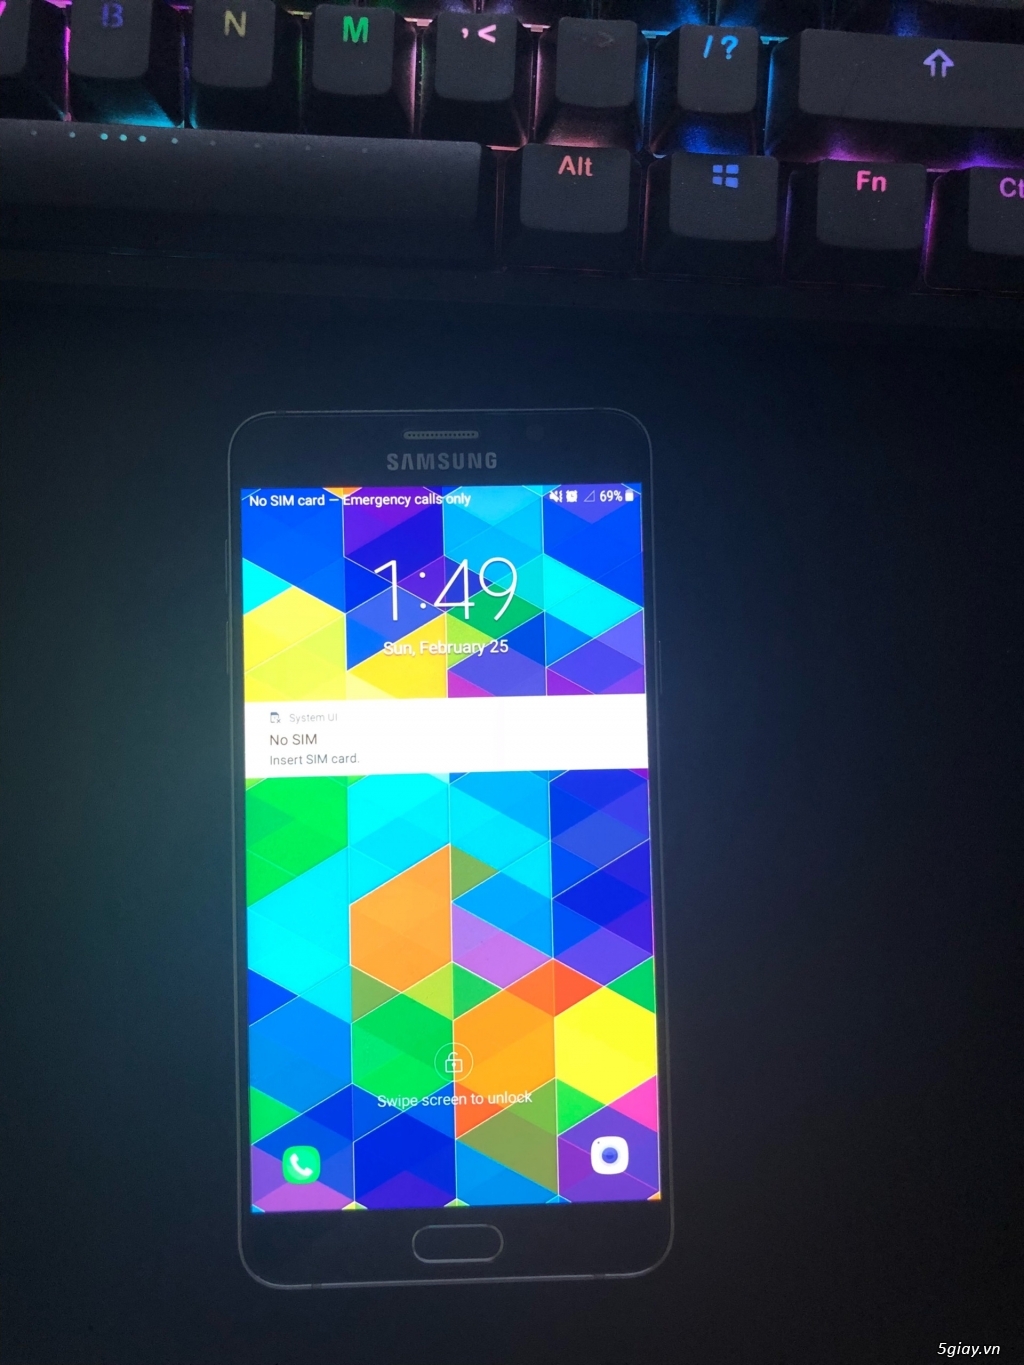 SamSung Galaxy Note 5 USA - 5